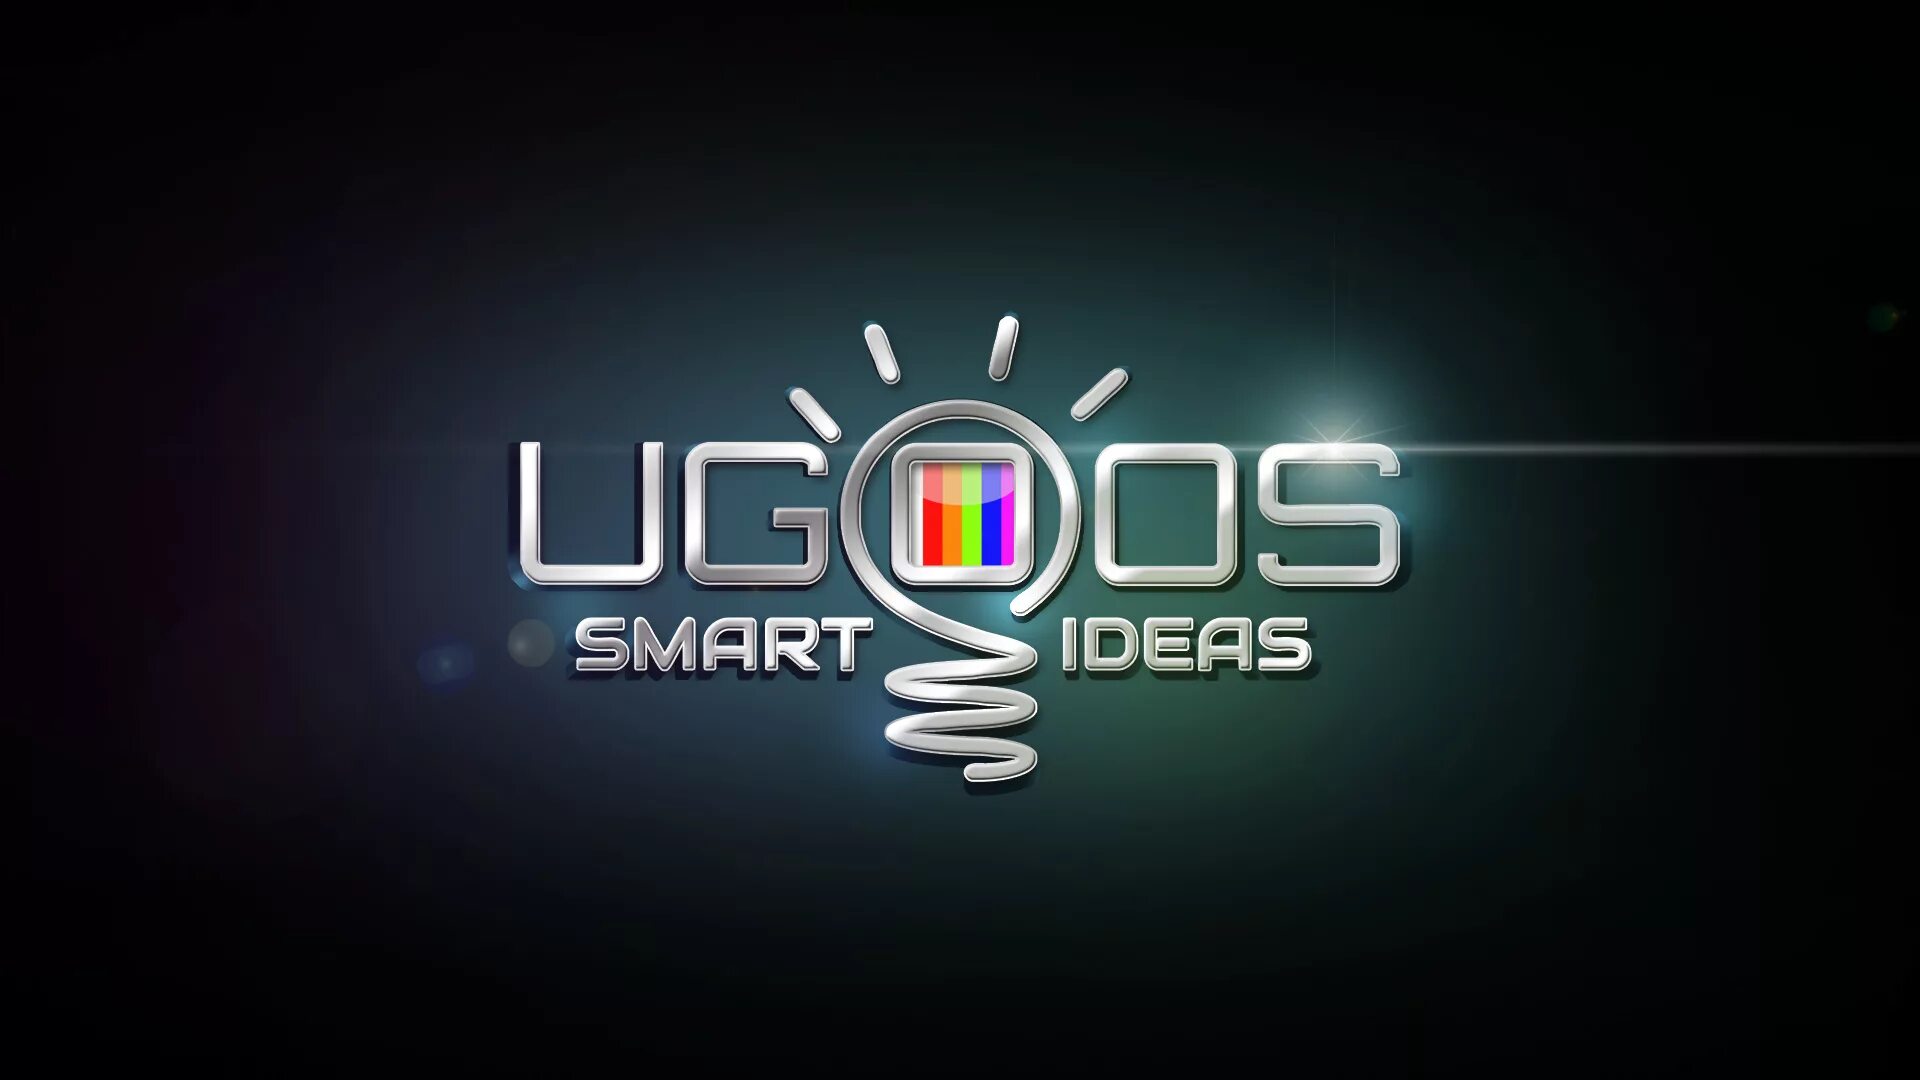 Андроид тв 4.4 4. Ugoos. Заставка ugoos. Ugoos логотип. Обои для ТВ бокса ugoos.